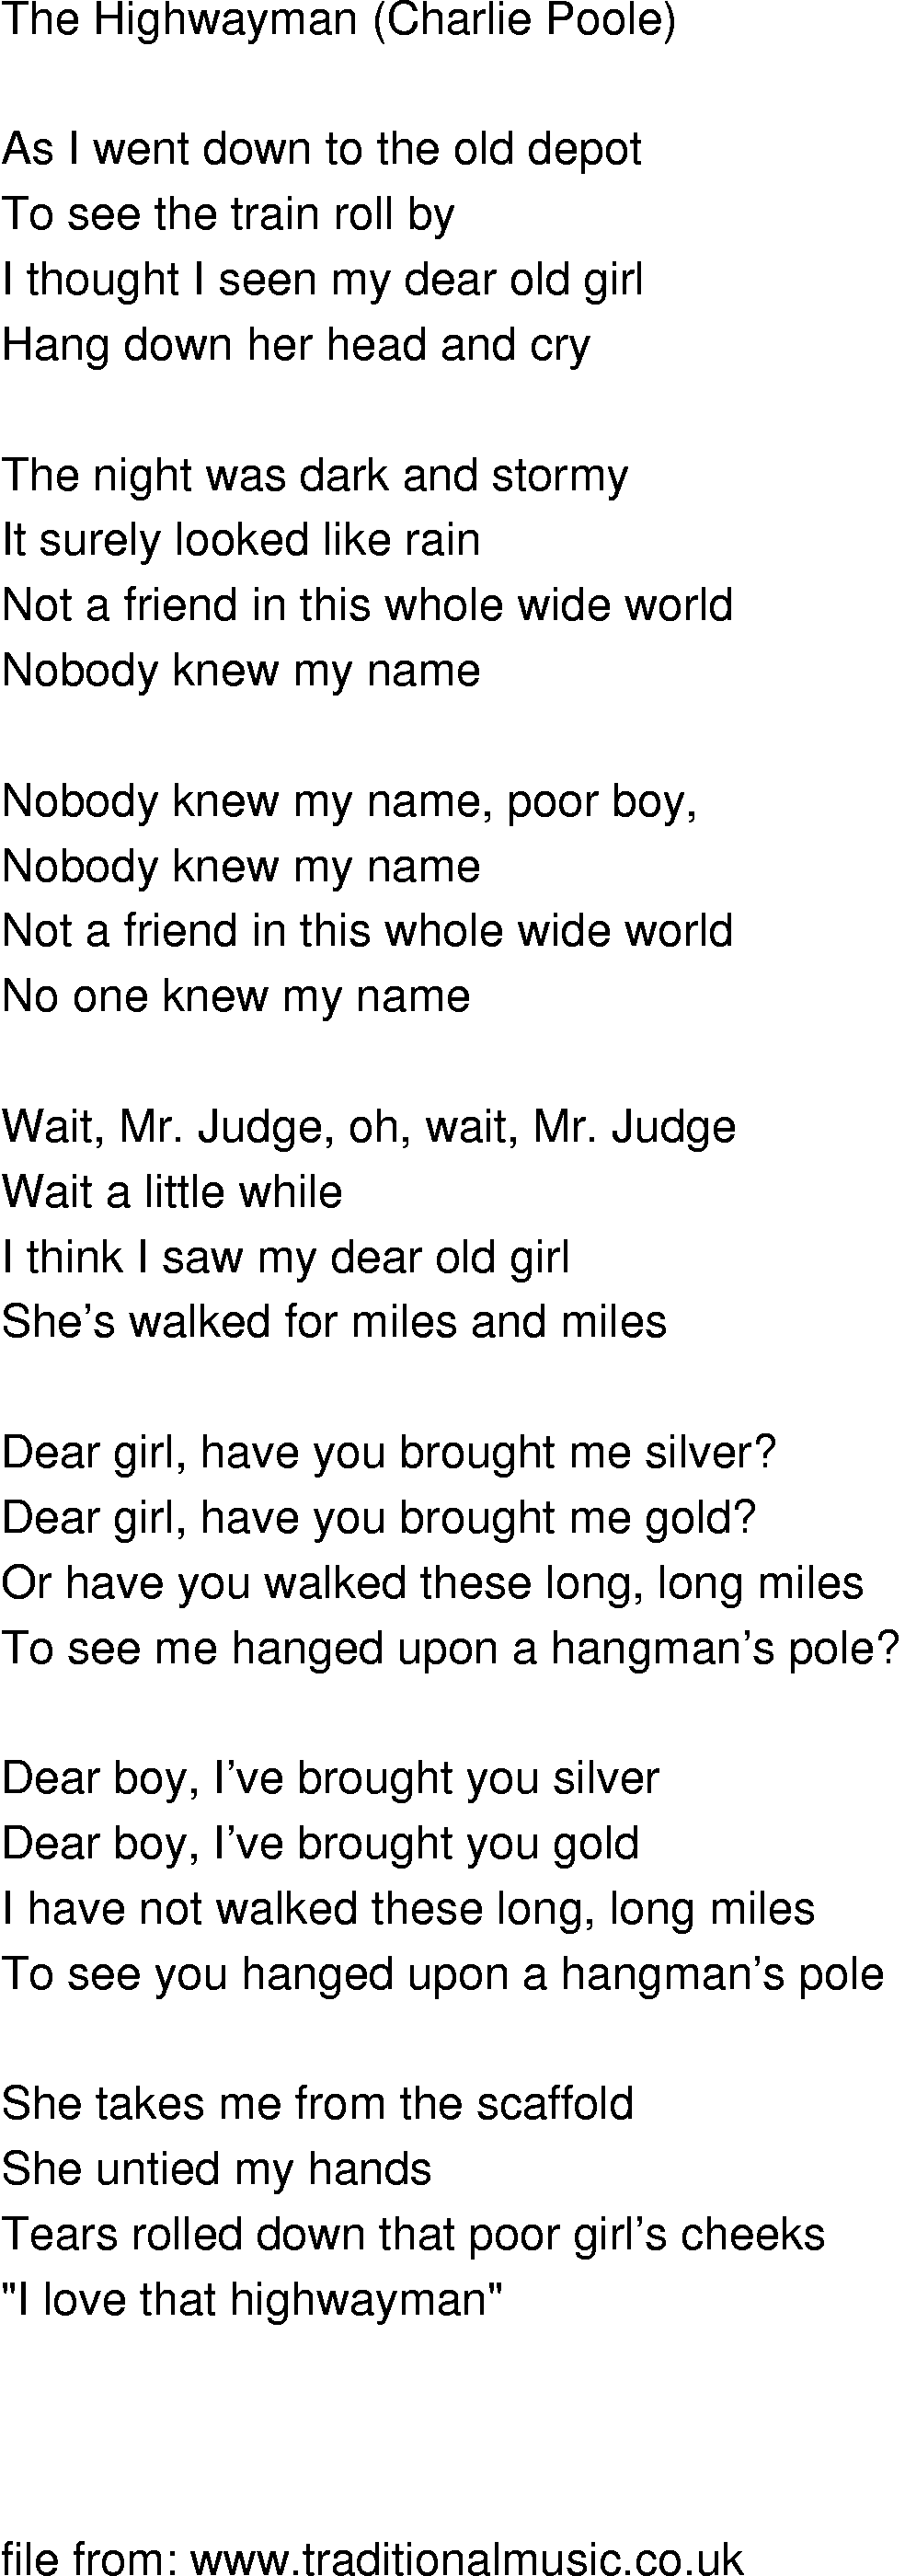 Old-Time (oldtimey) Song Lyrics - the highwayman